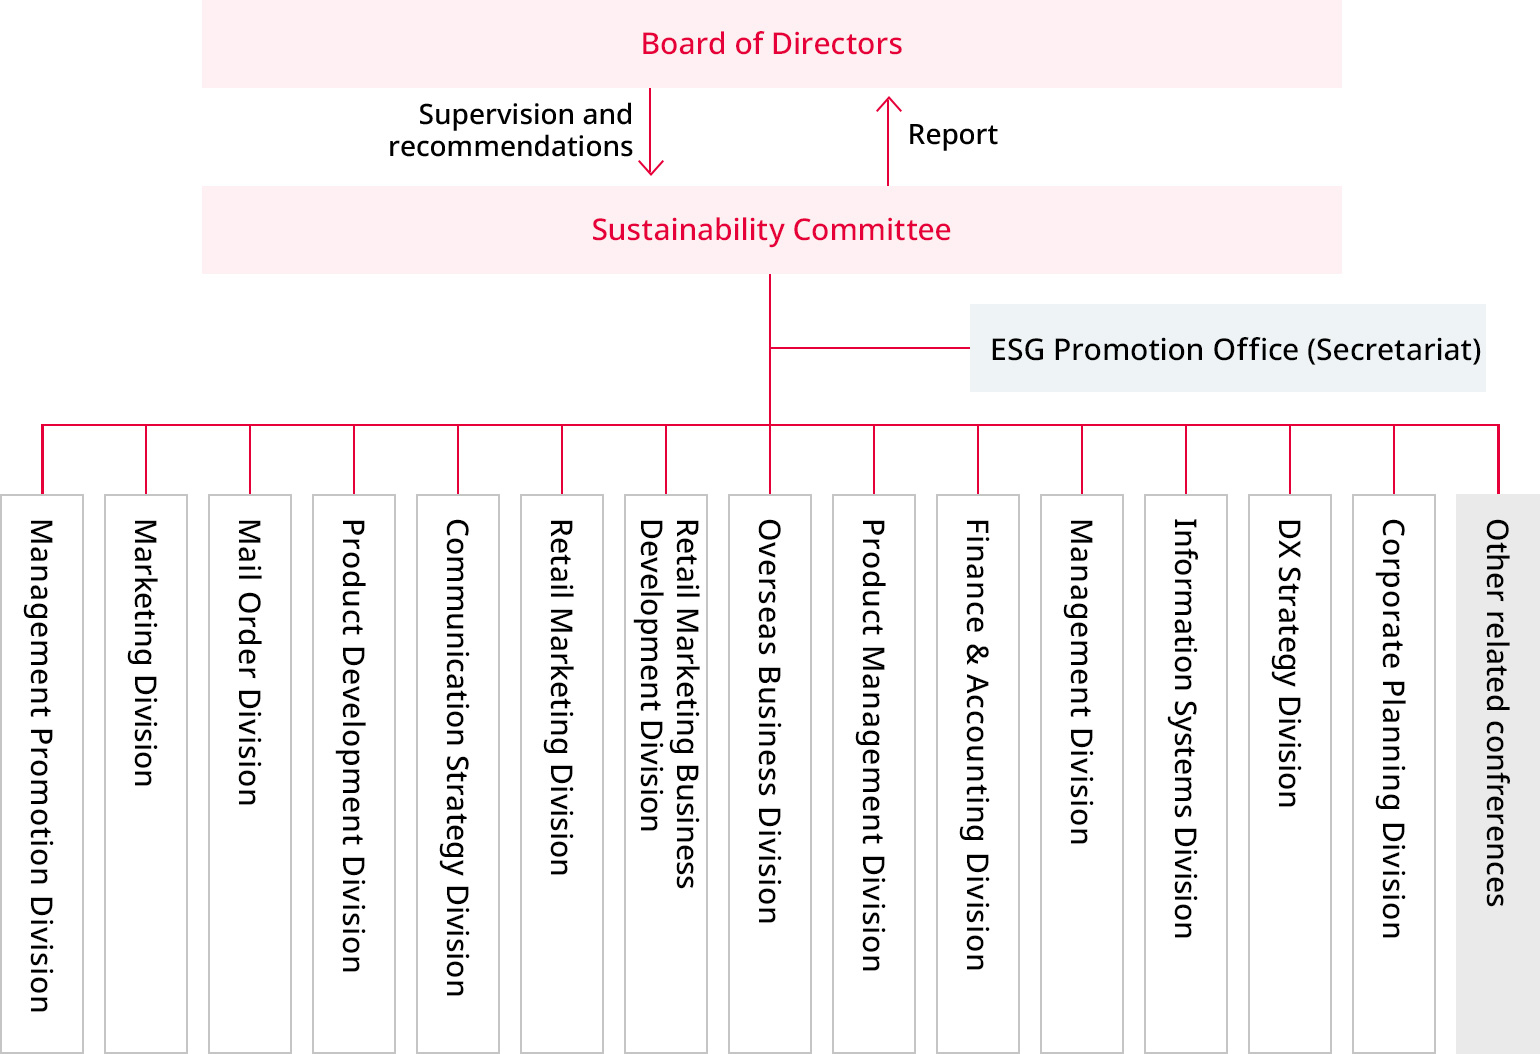 Sustainability promotion system